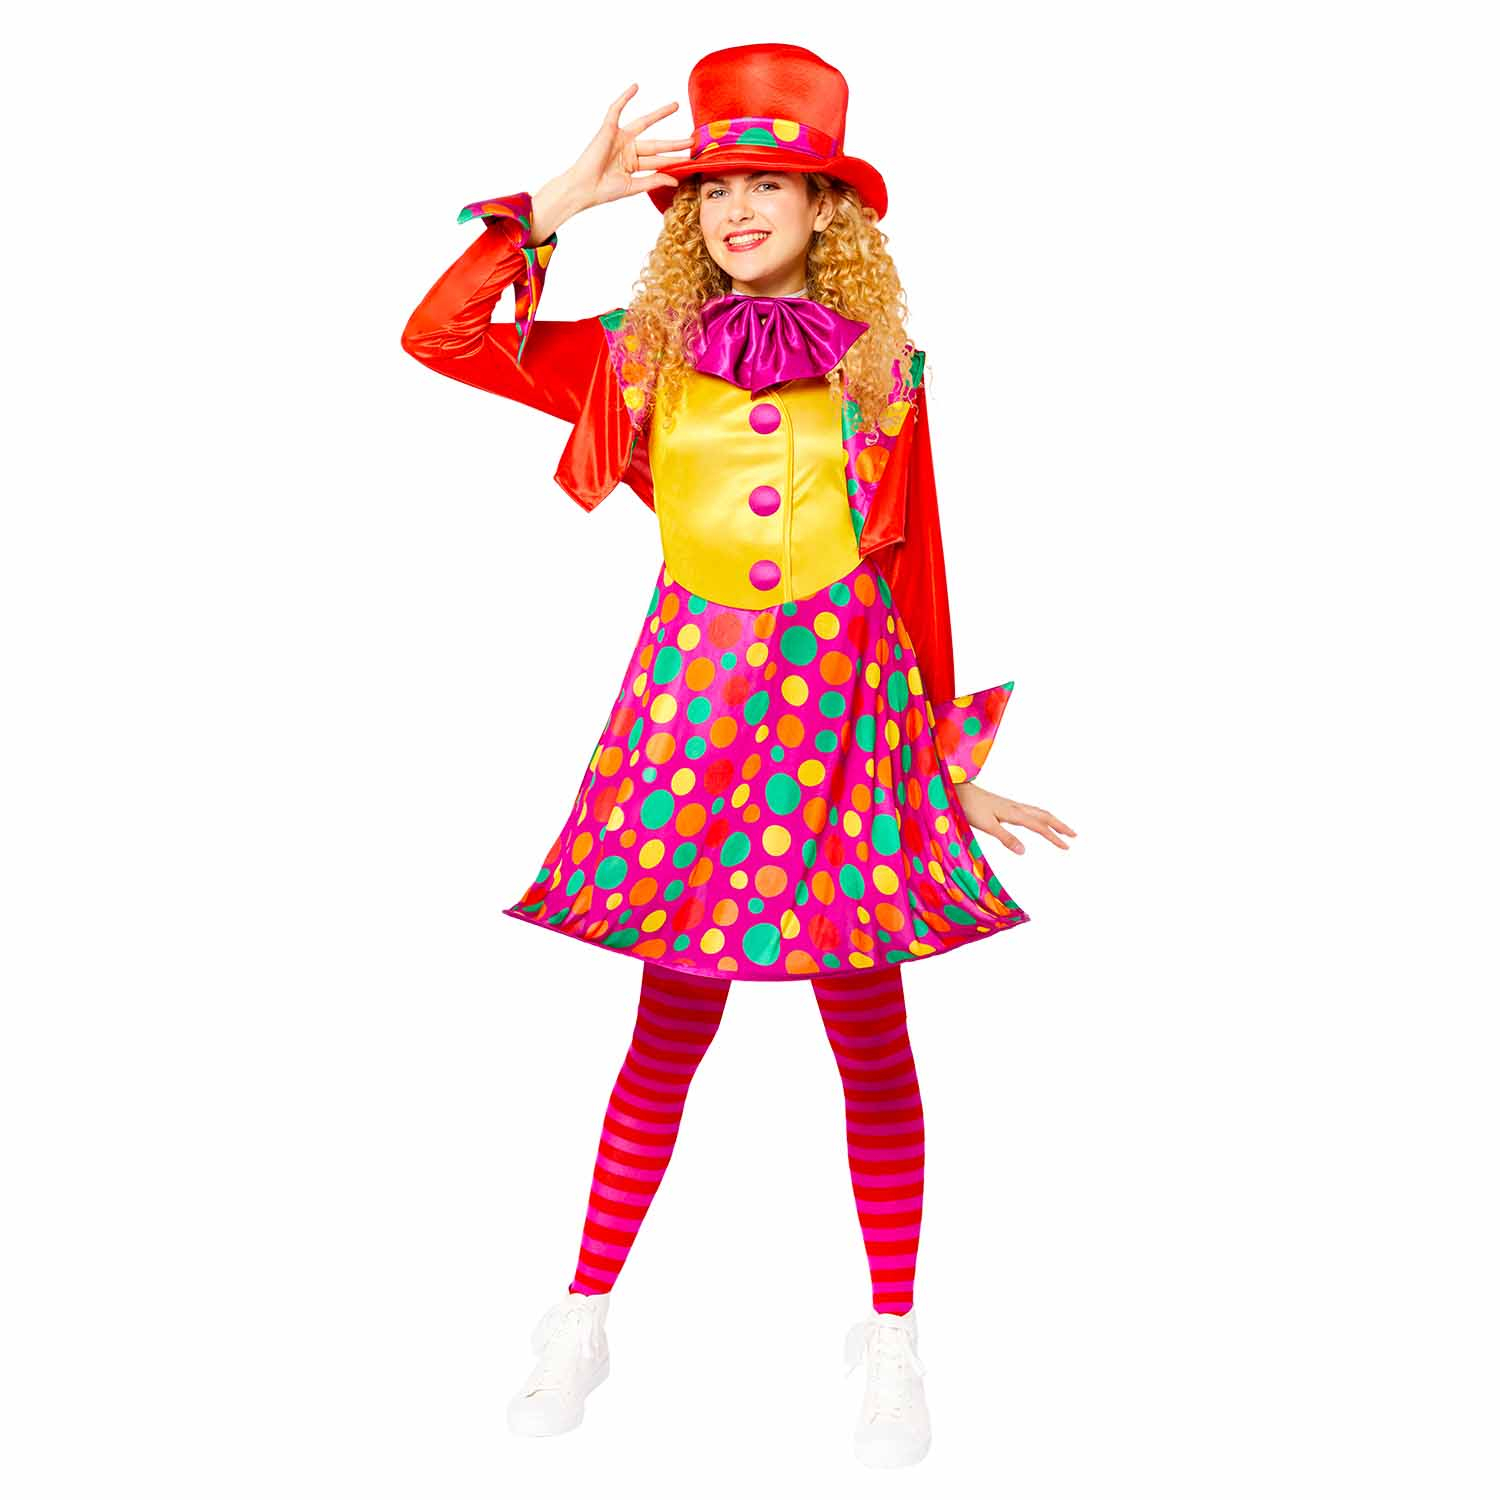 Circus Clown Costume - Size 12-14 - 1 PC : Amscan International